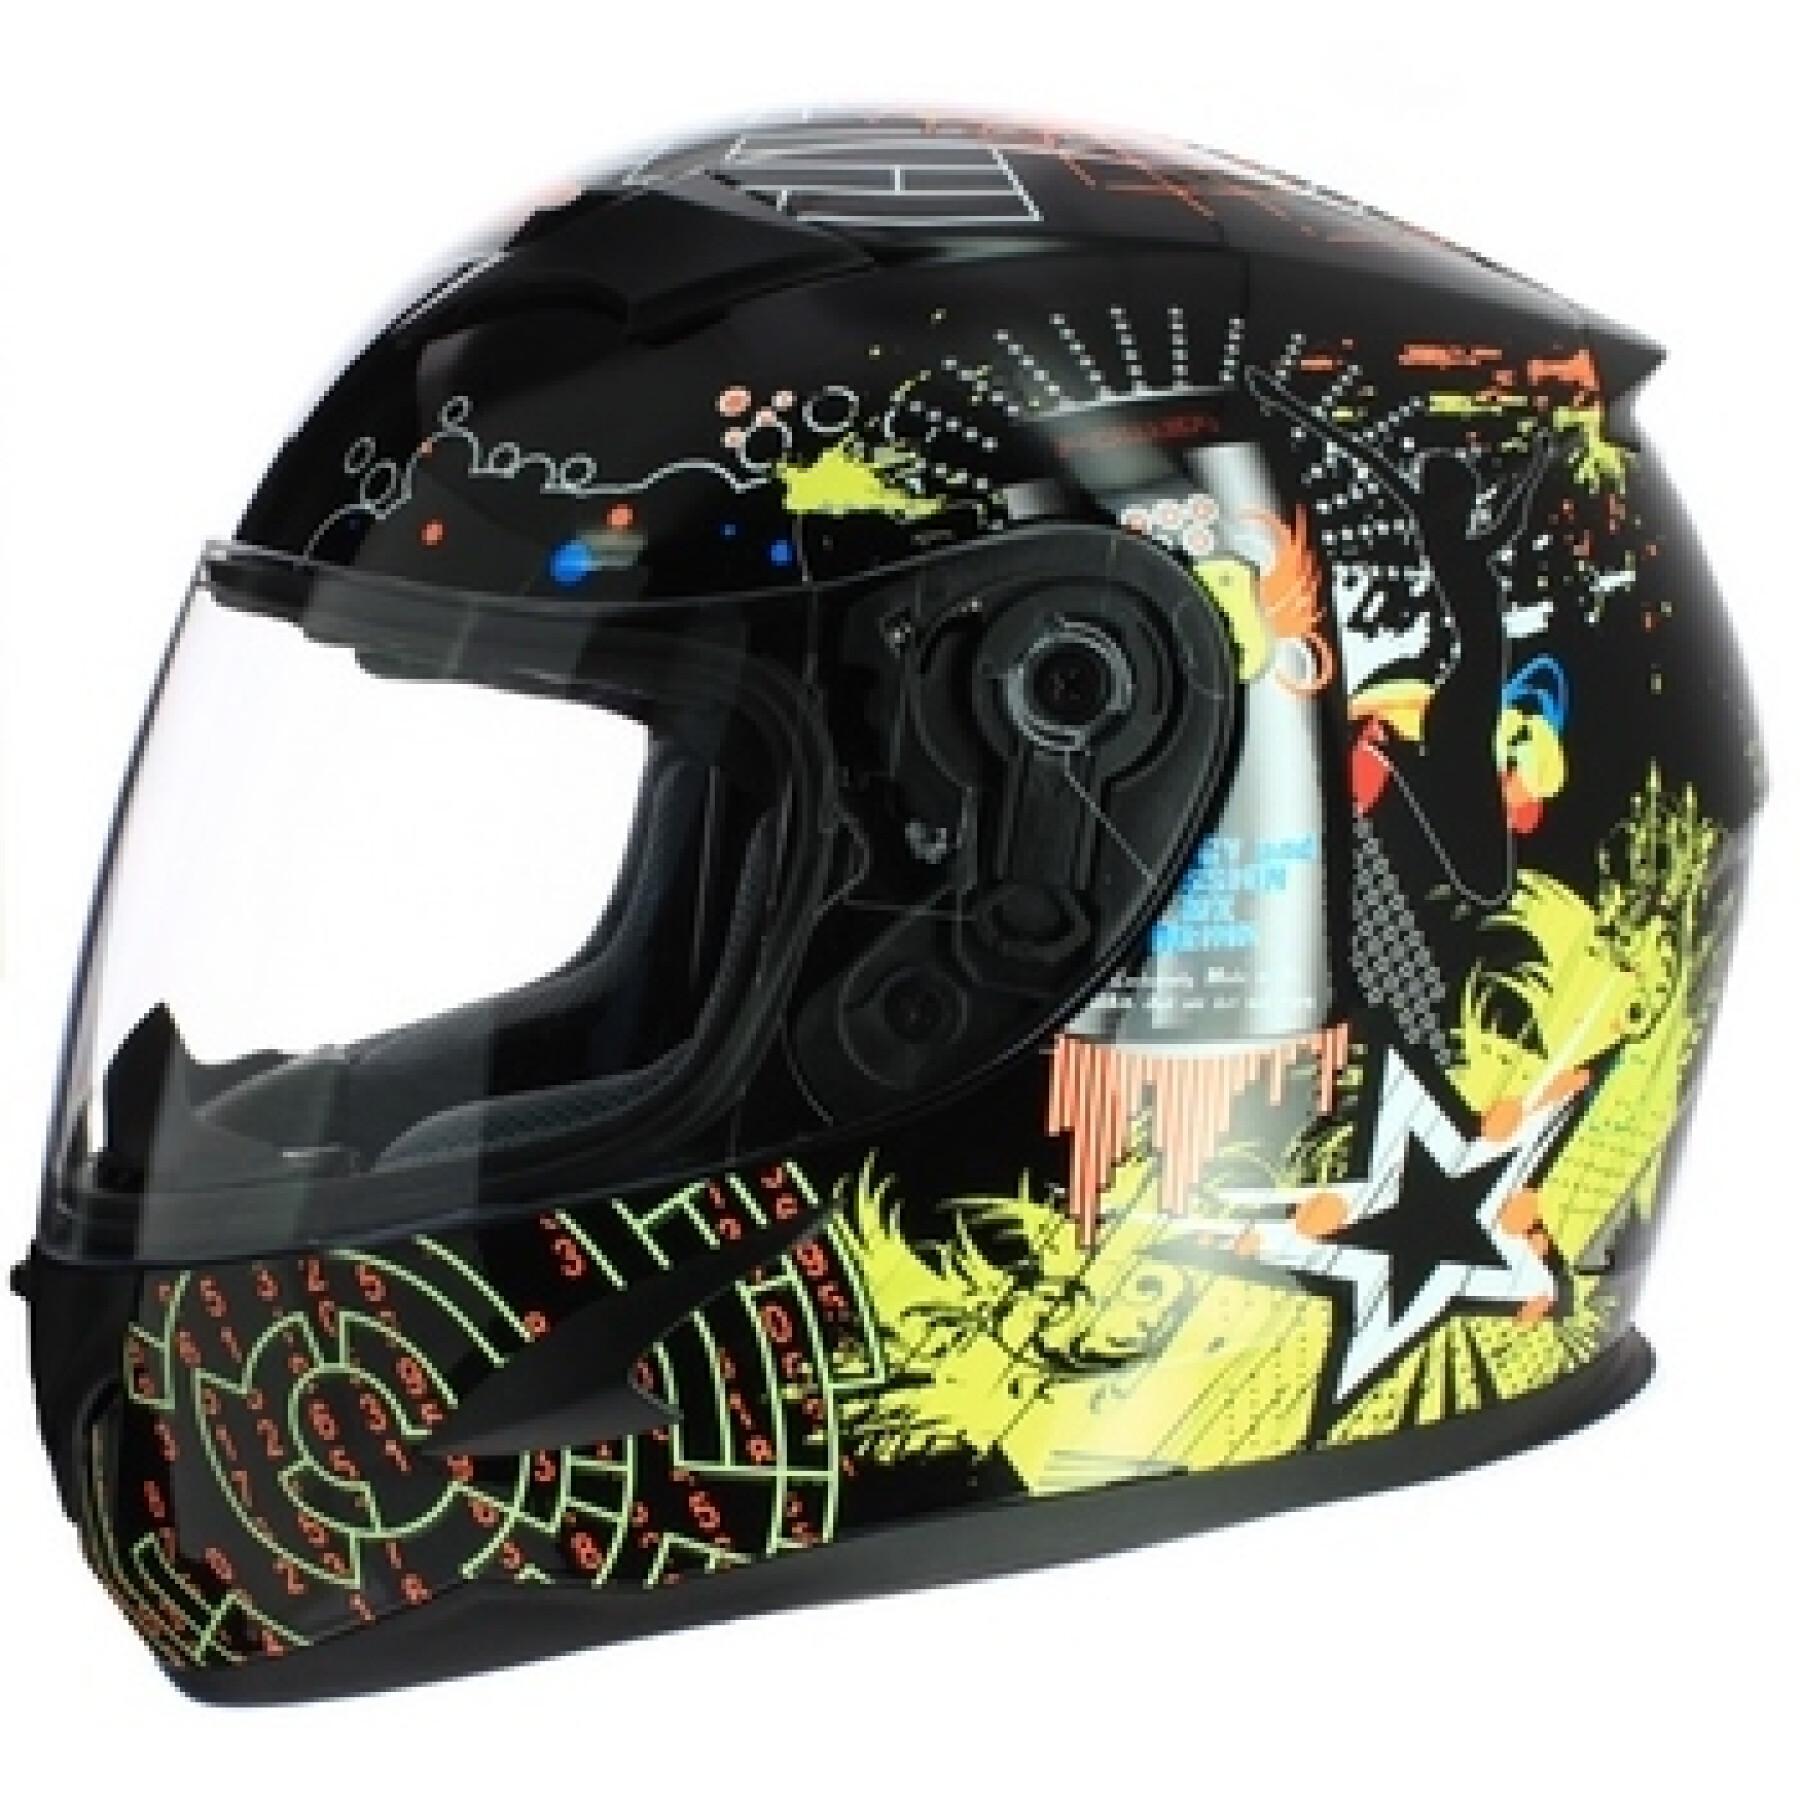 Full face motorcycle helmet Iota Pixy